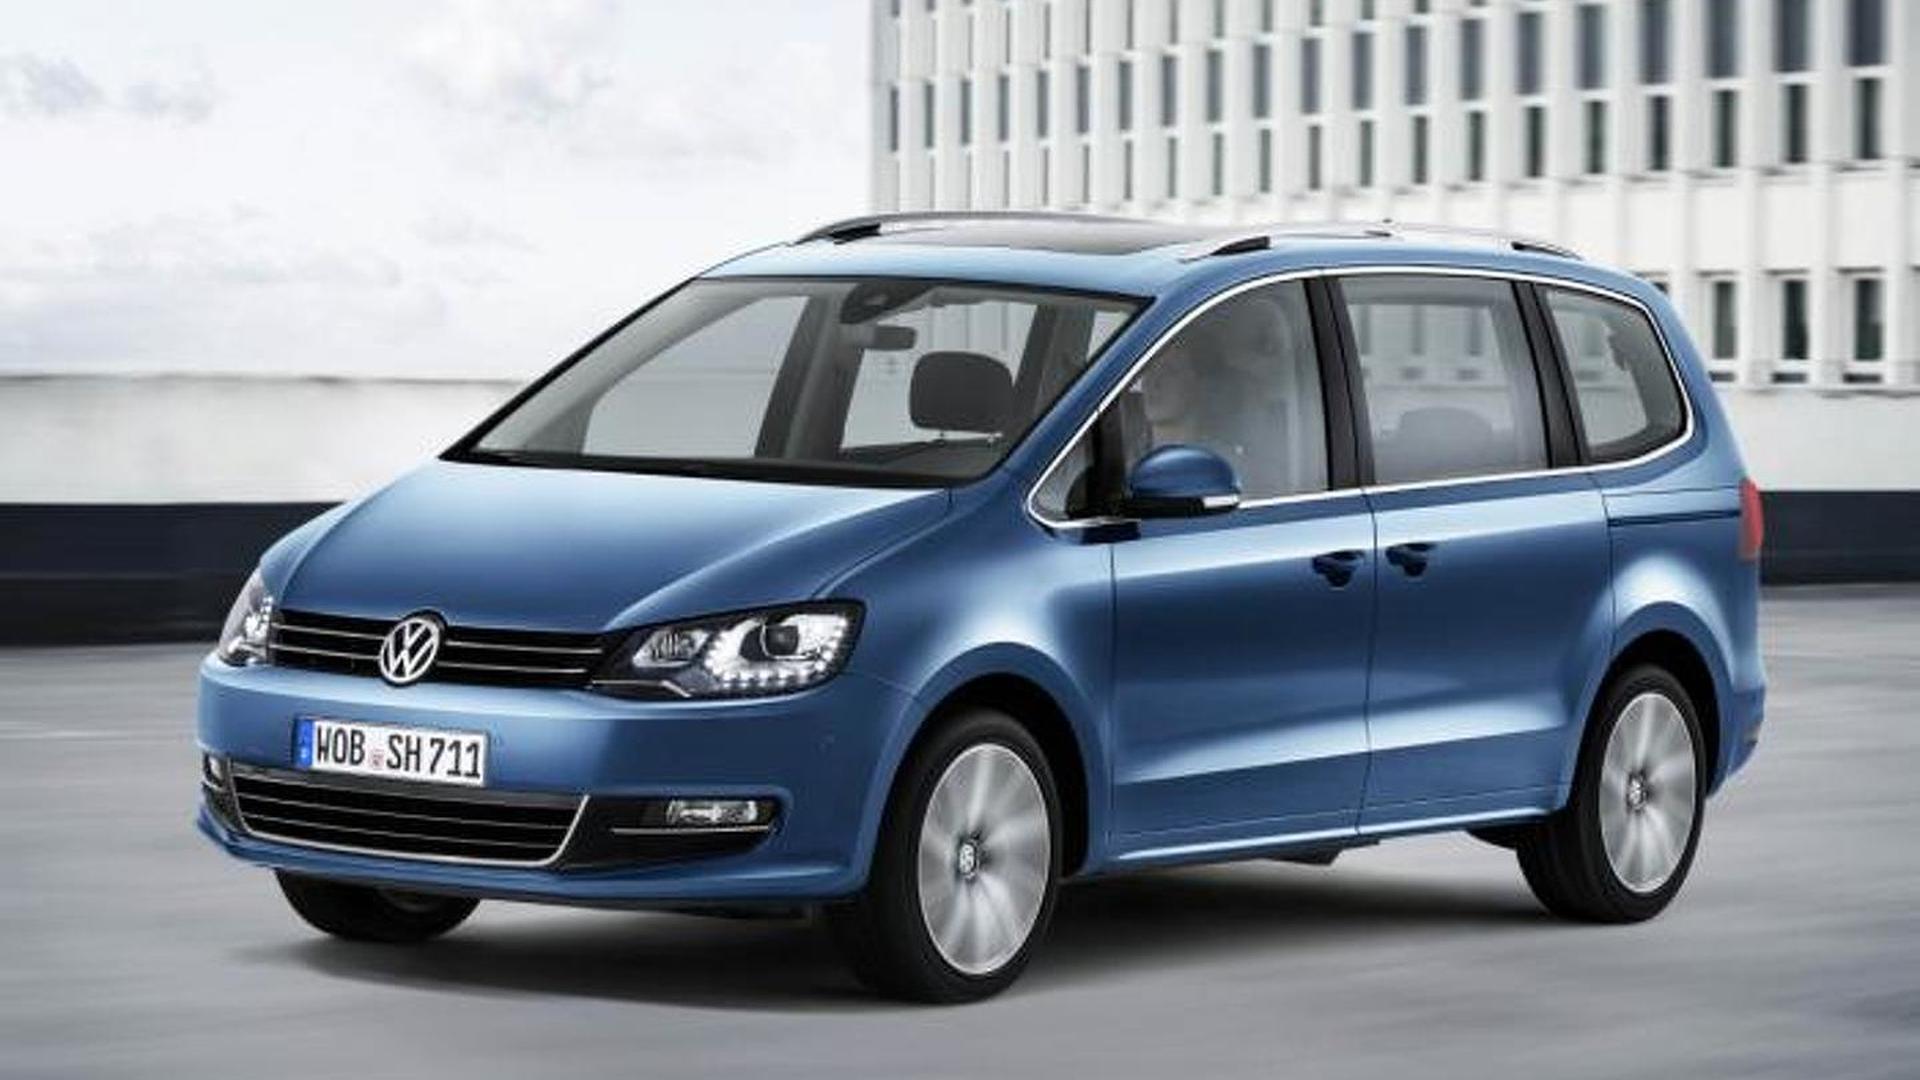 Volkswagen Sharan facelift first official pics hit